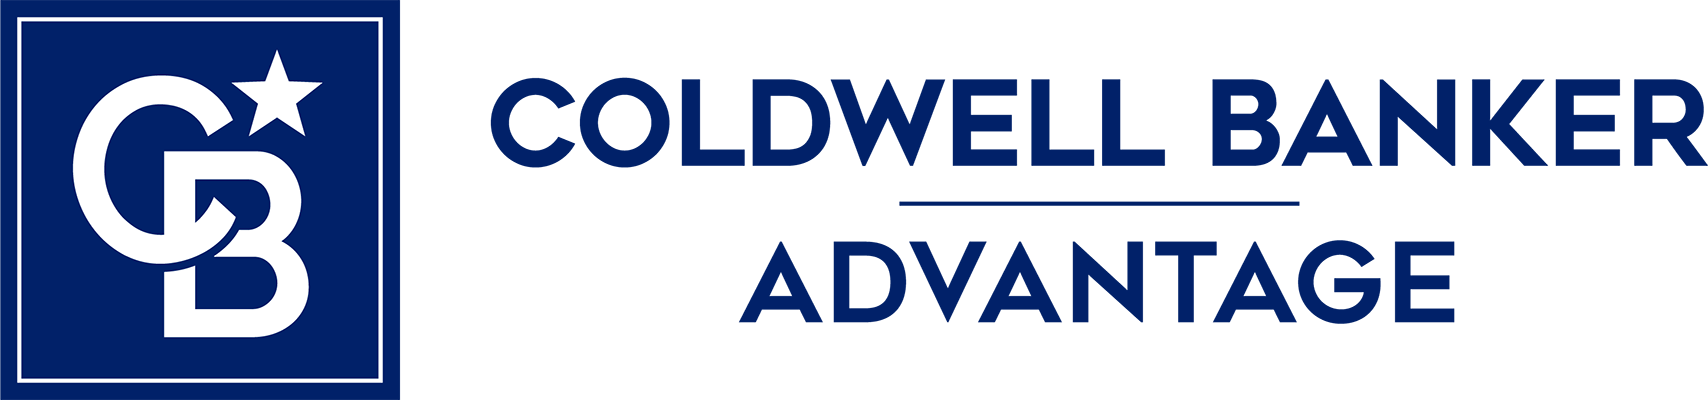 Lynn Furr - Coldwell Banker Advantage Logo